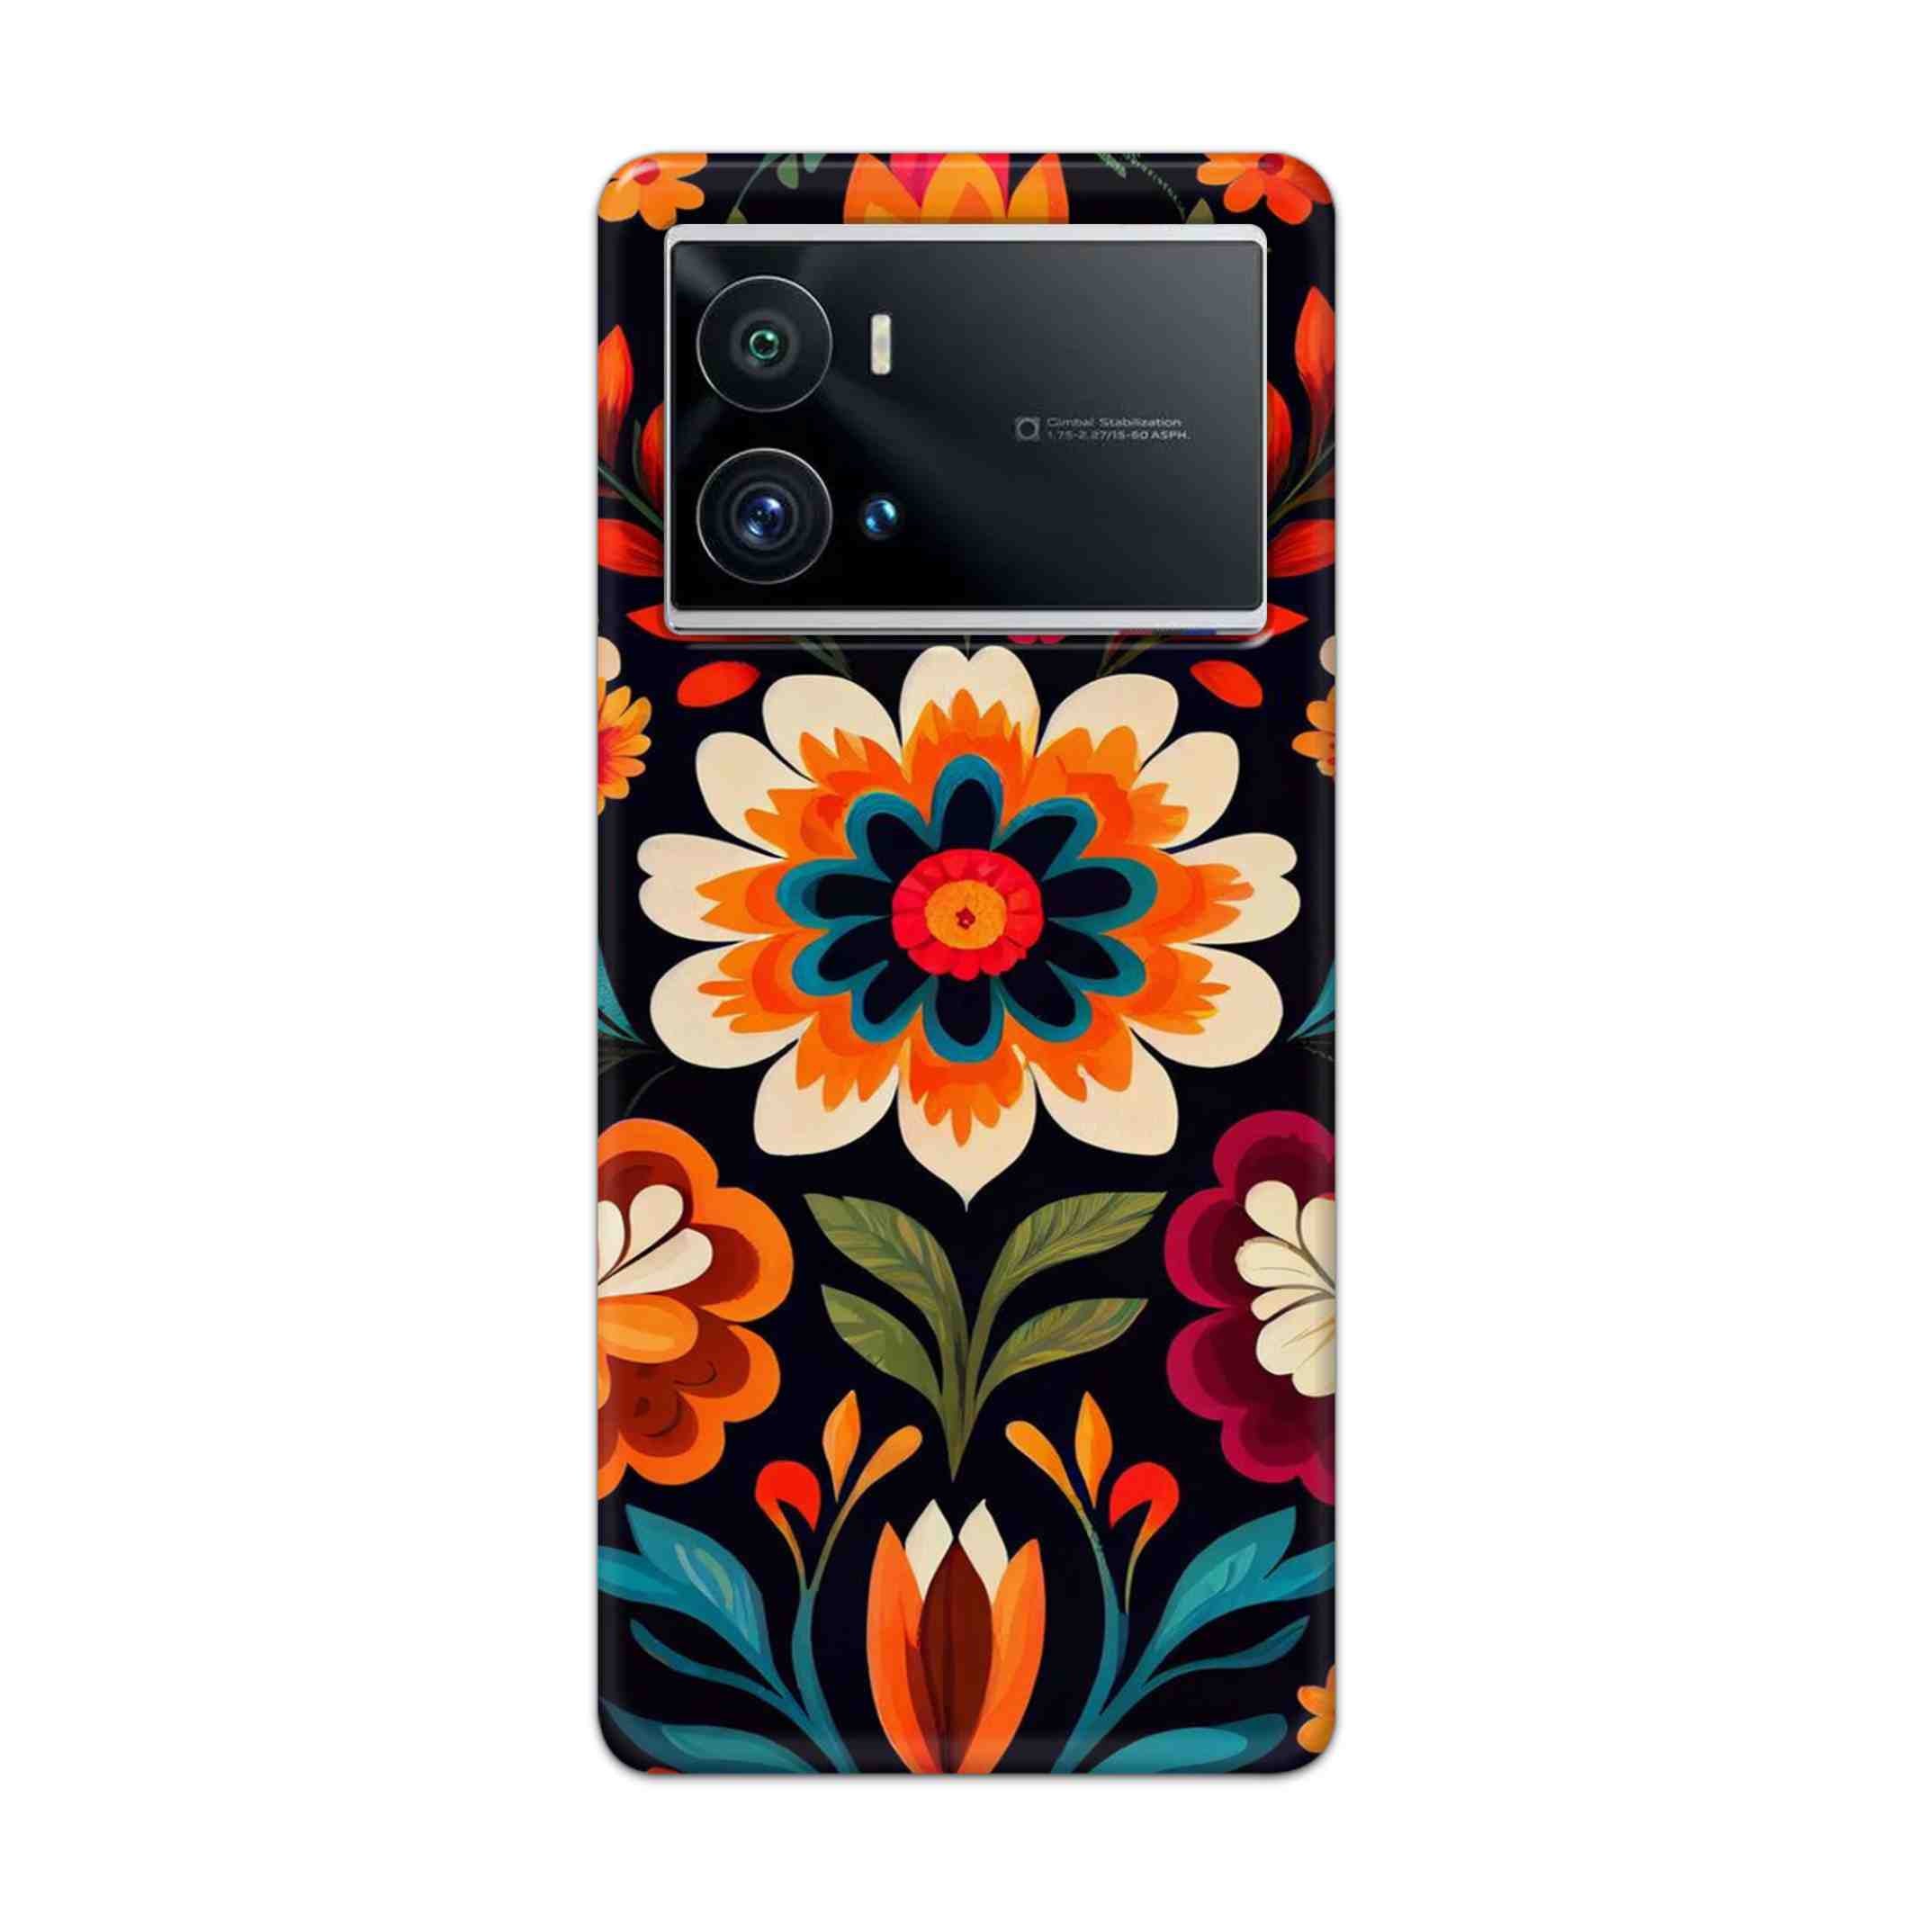 Buy Flower Hard Back Mobile Phone Case Cover For iQOO 9 Pro 5G Online